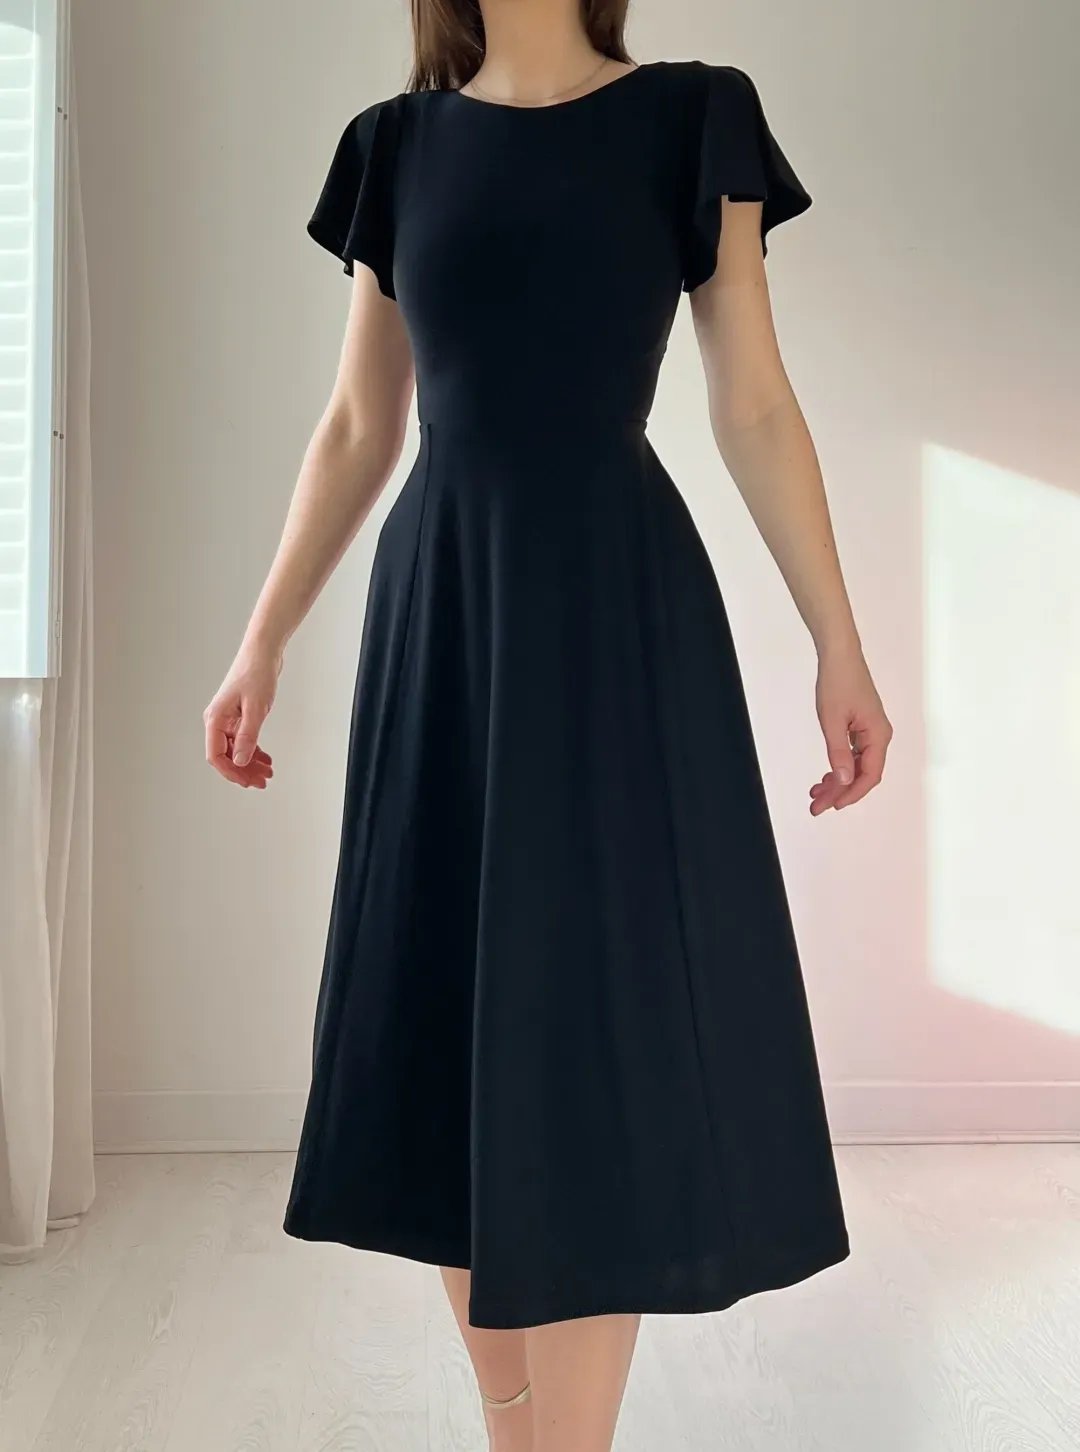 New Elegant Reversible Bodycon Dress